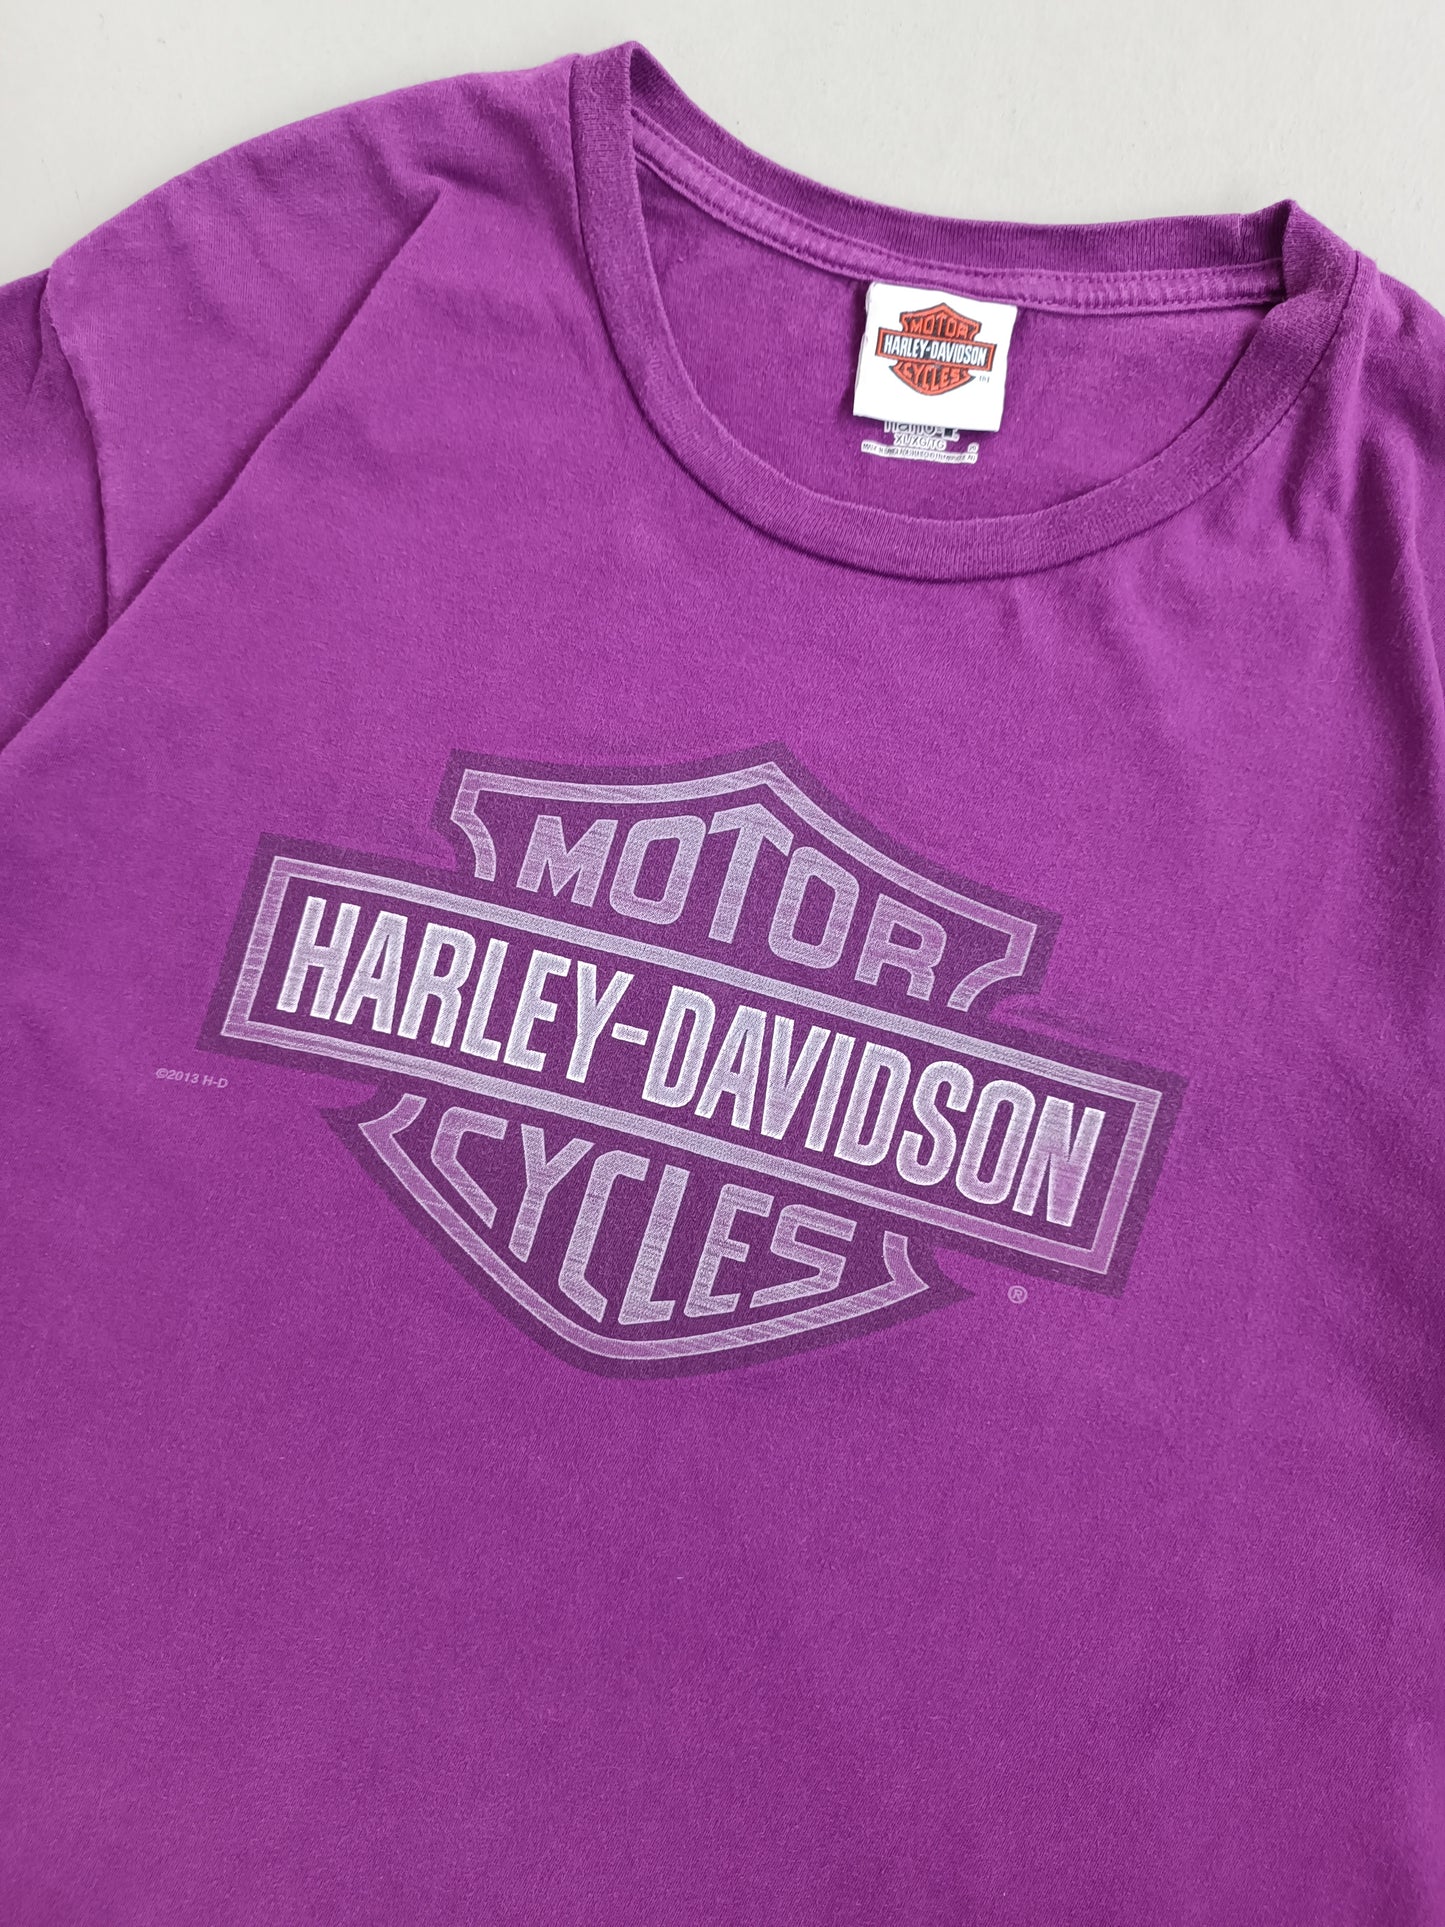 Harley Davidson Appleton - XL